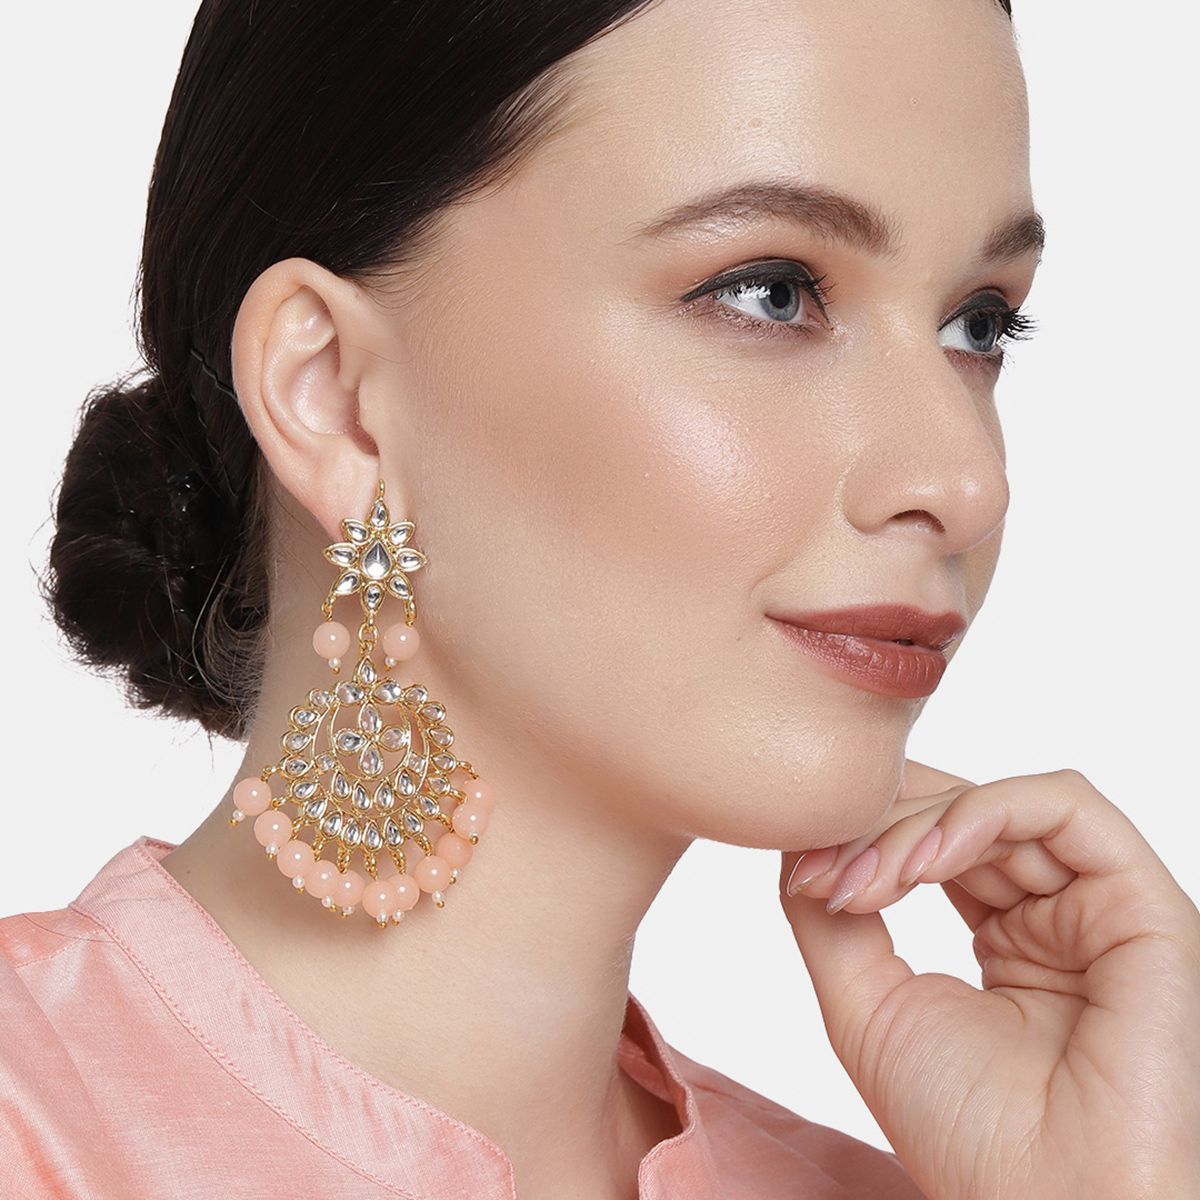 Details more than 77 peach pearl earrings best